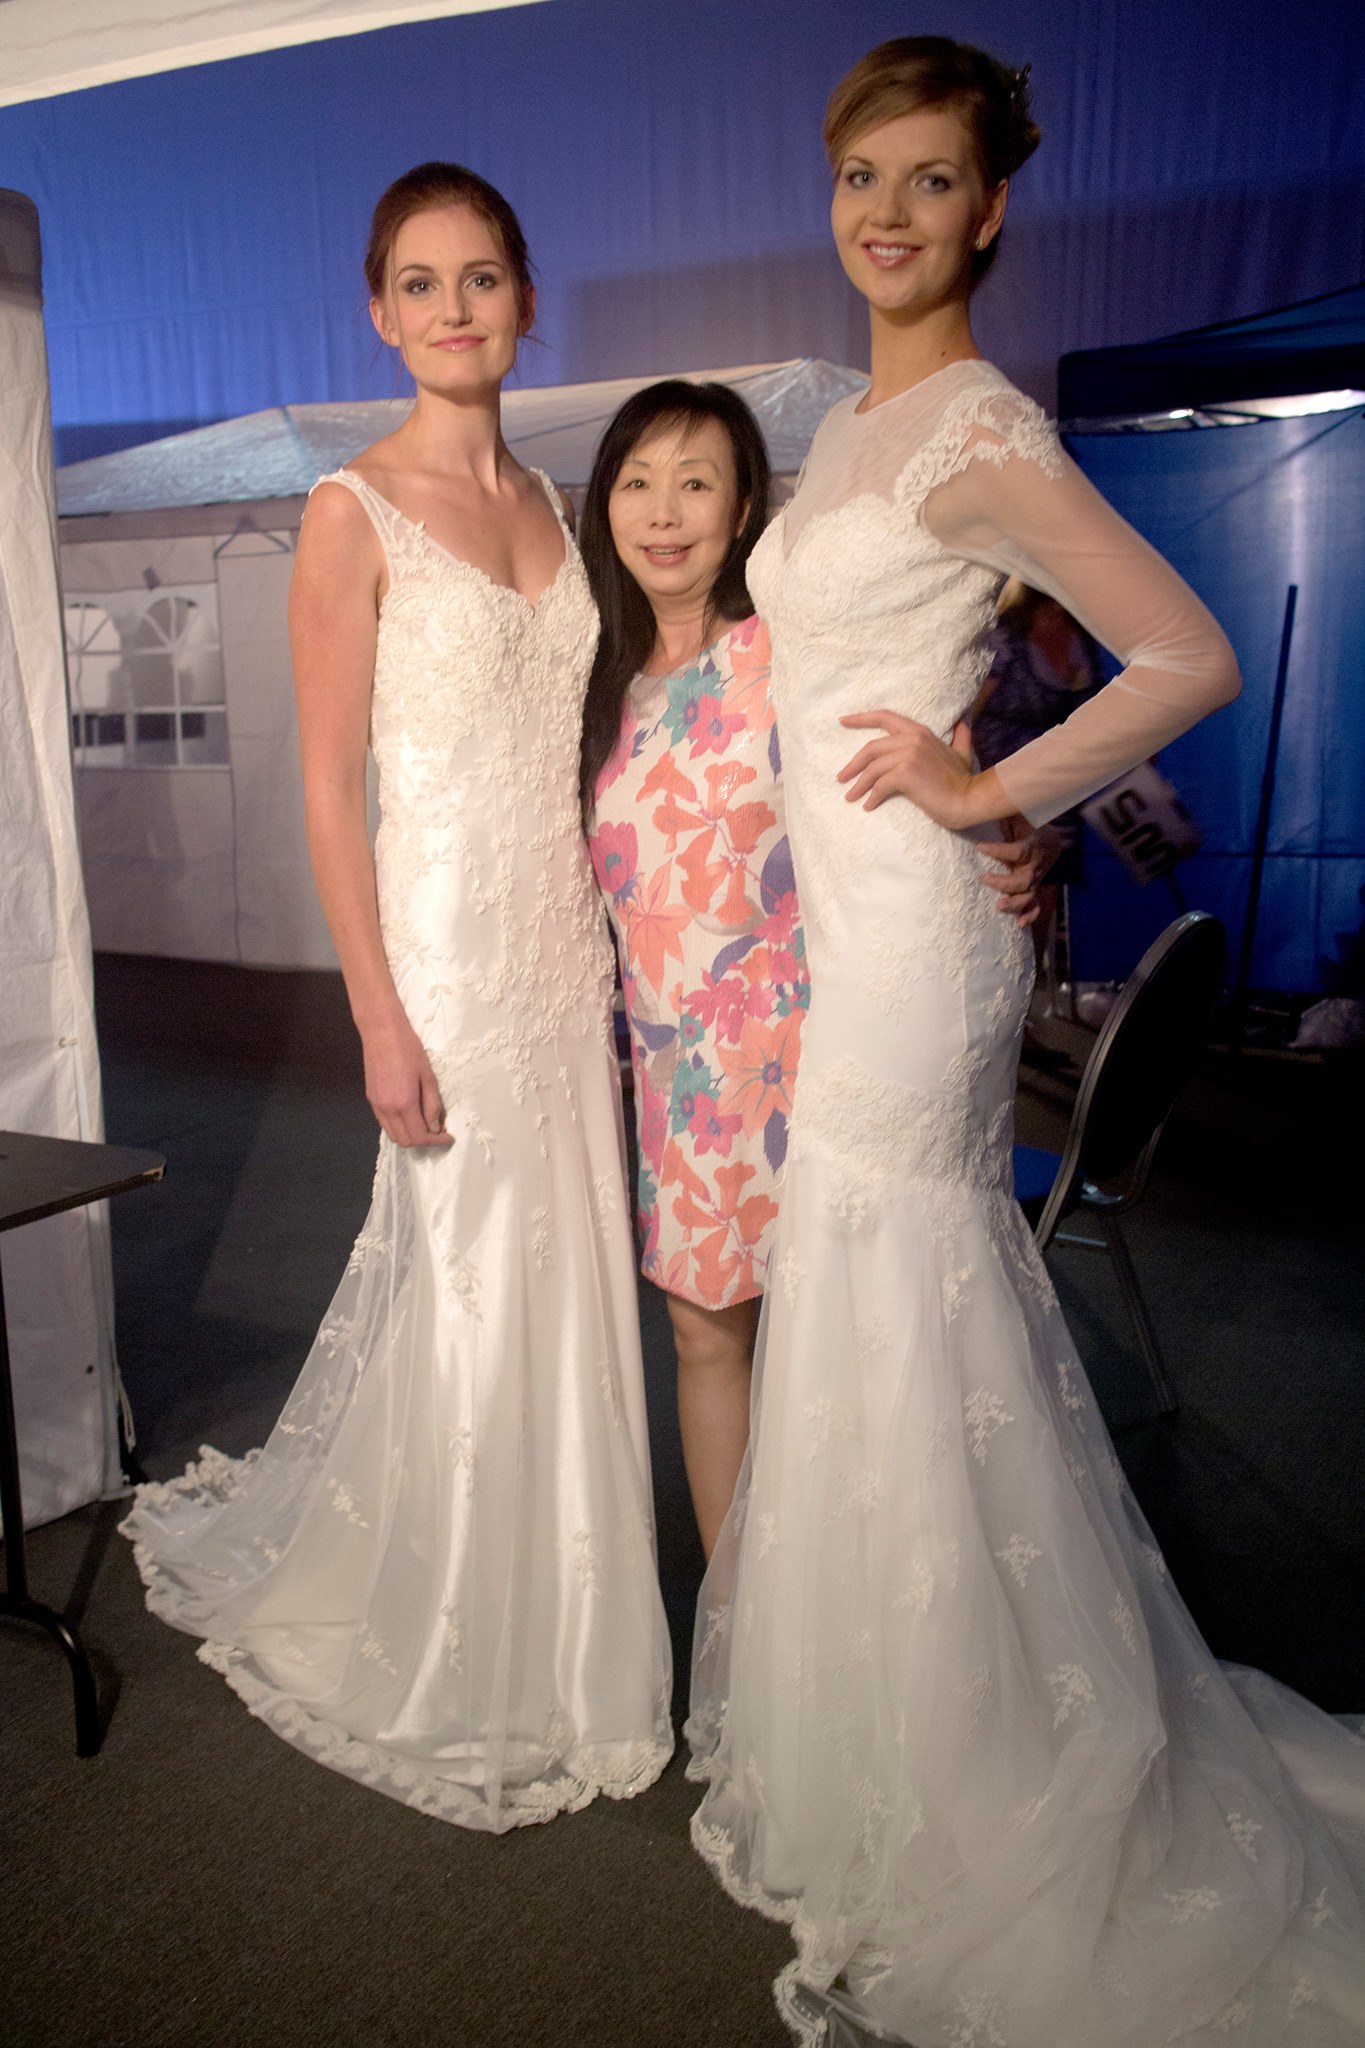 Thank You North City Wedding & Bridal Expo!